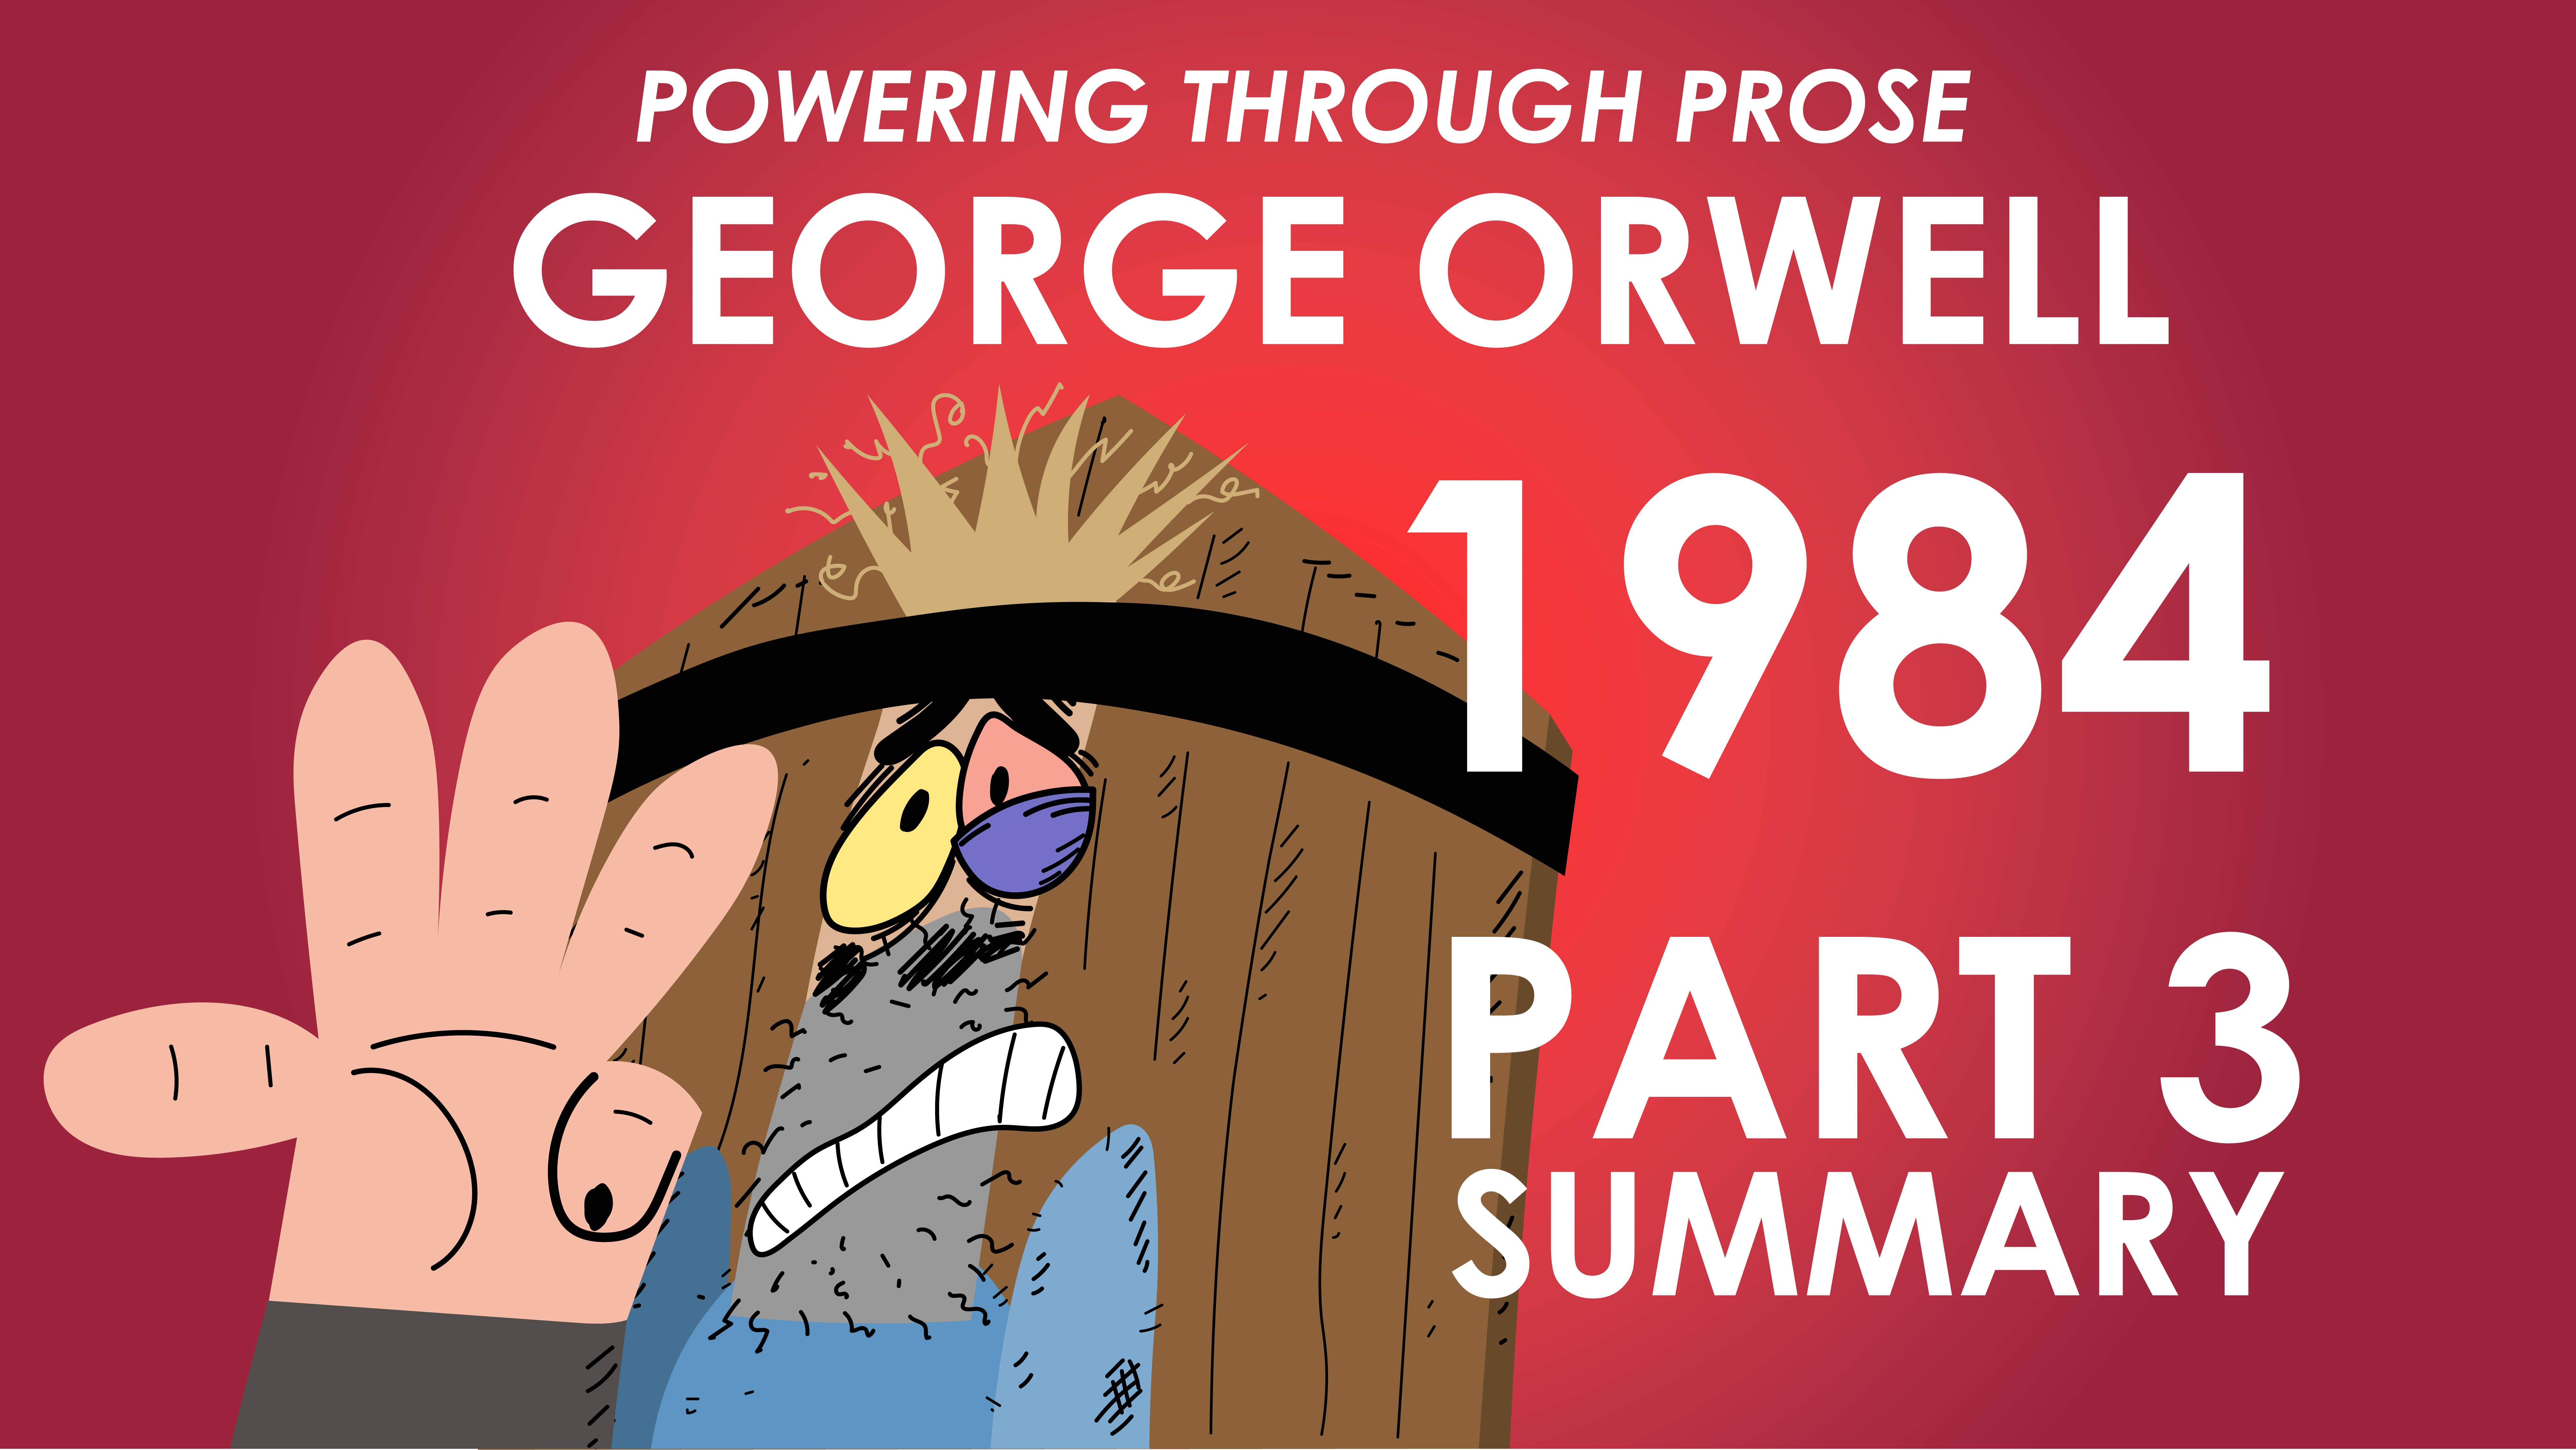 1984 - George Orwell - Part 3 Summary - Powering Through Prose Series 